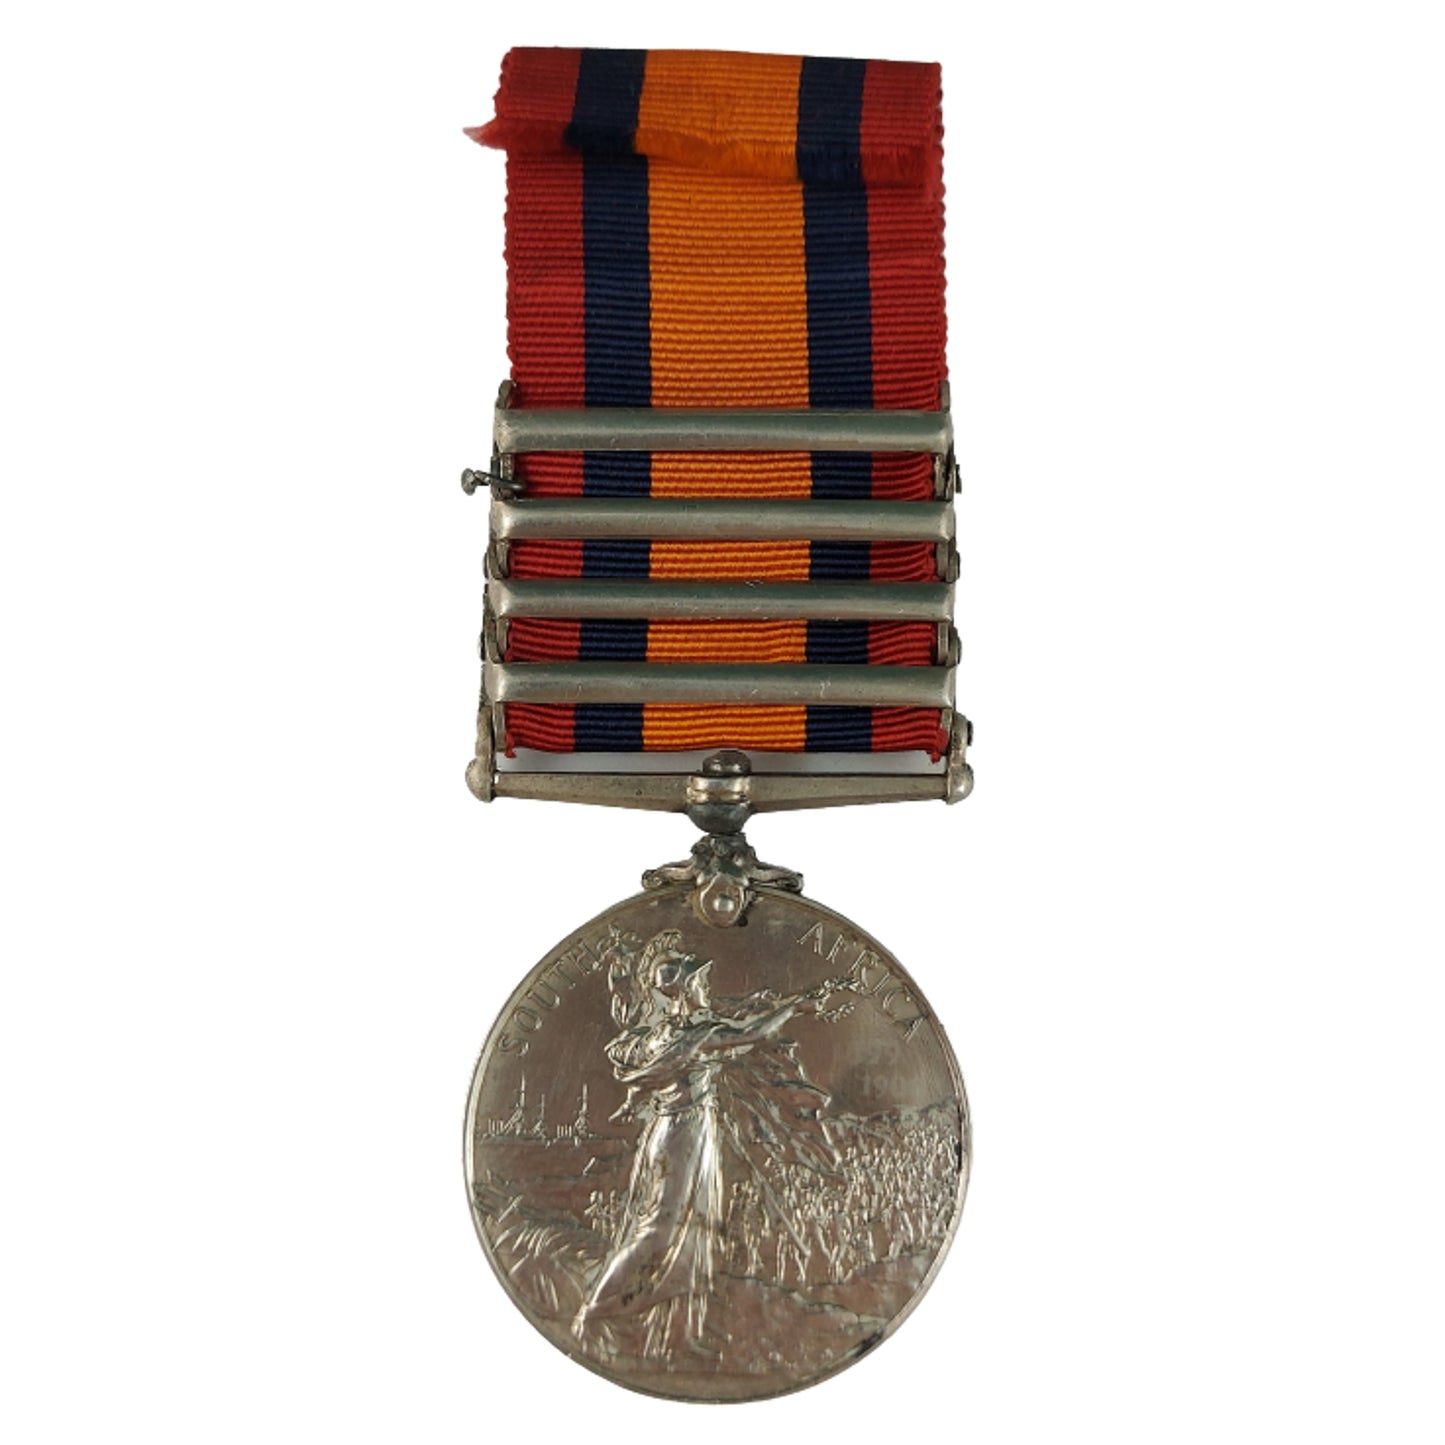 Pre-WW1 British QSA Queen's South Africa Medal - Volunteer Company Loyal North Lancashire Regiment